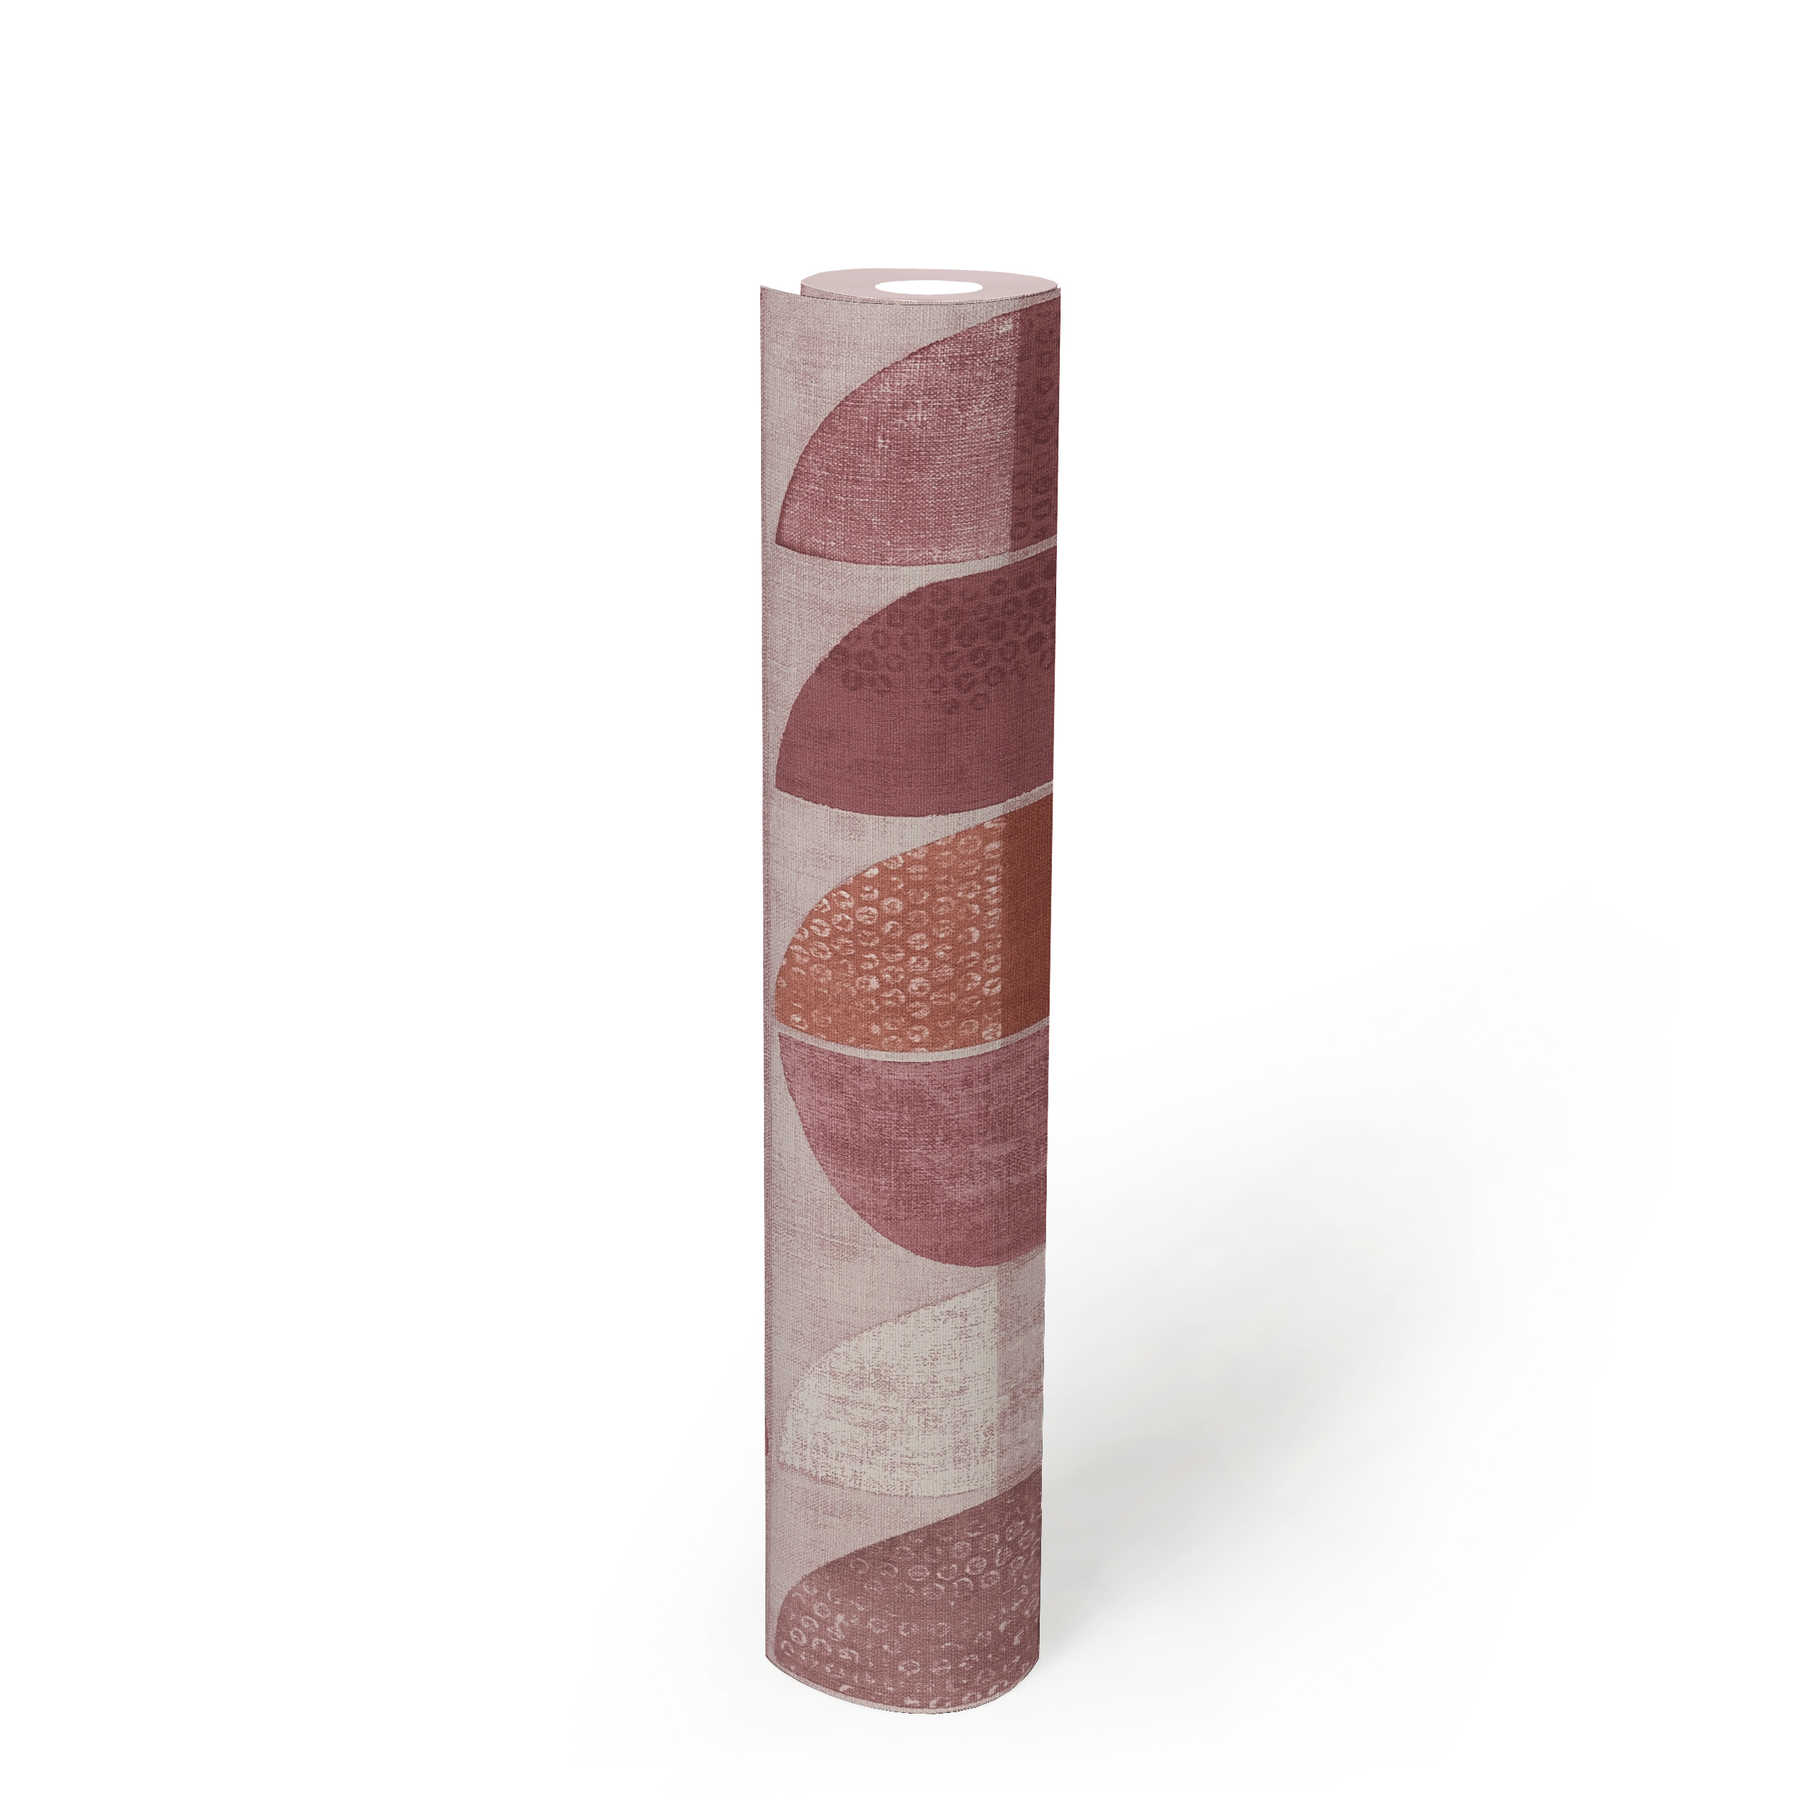             Papier peint Retro Design style scandinave - rouge, rose, beige
        